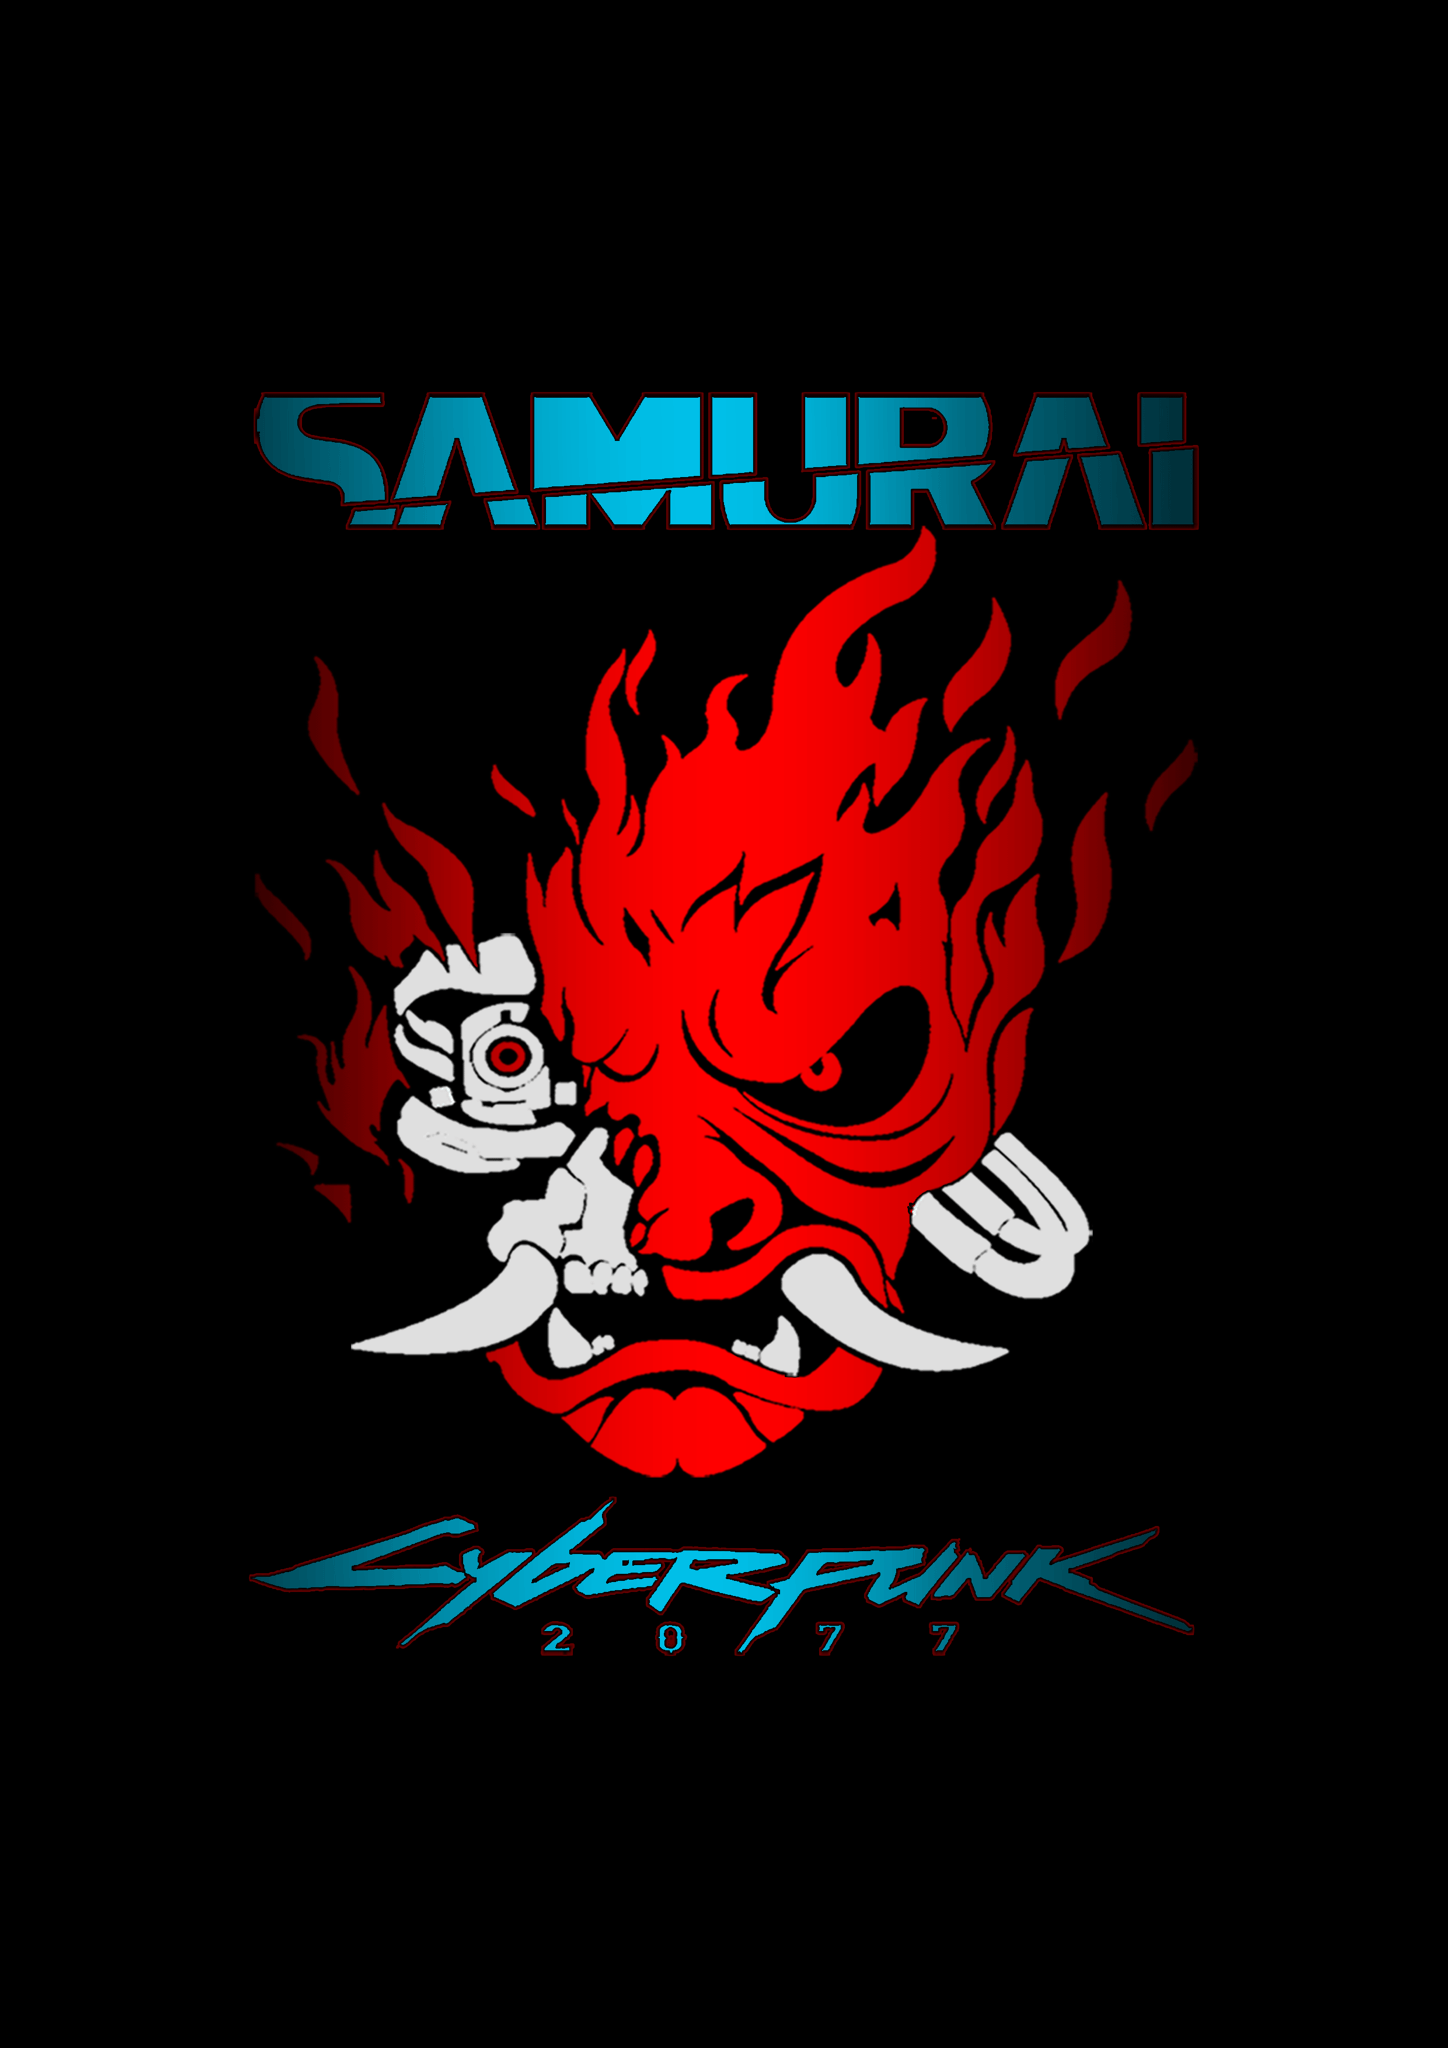 Wallpaper cyberpunk 2077, samurai jacket, game character desktop wallpaper,  hd image, picture, background, 608a28